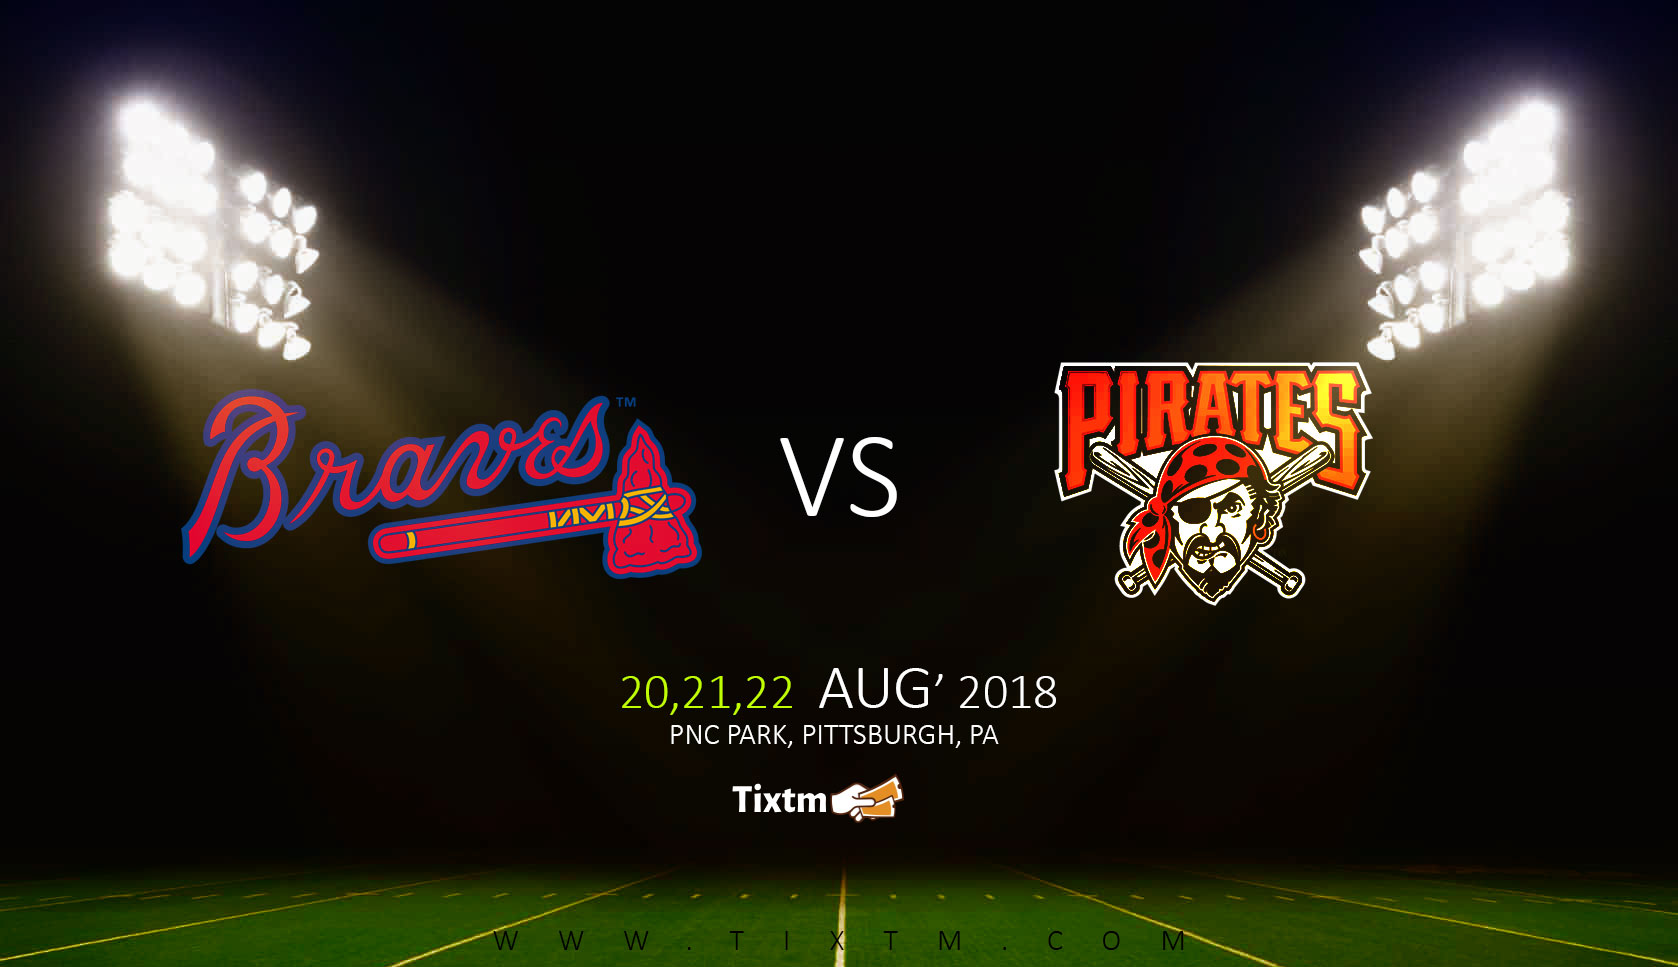 Pittsburgh Pirates vs. Atlanta Braves at Pittsburgh, Pittsburgh, Pennsylvania, United States